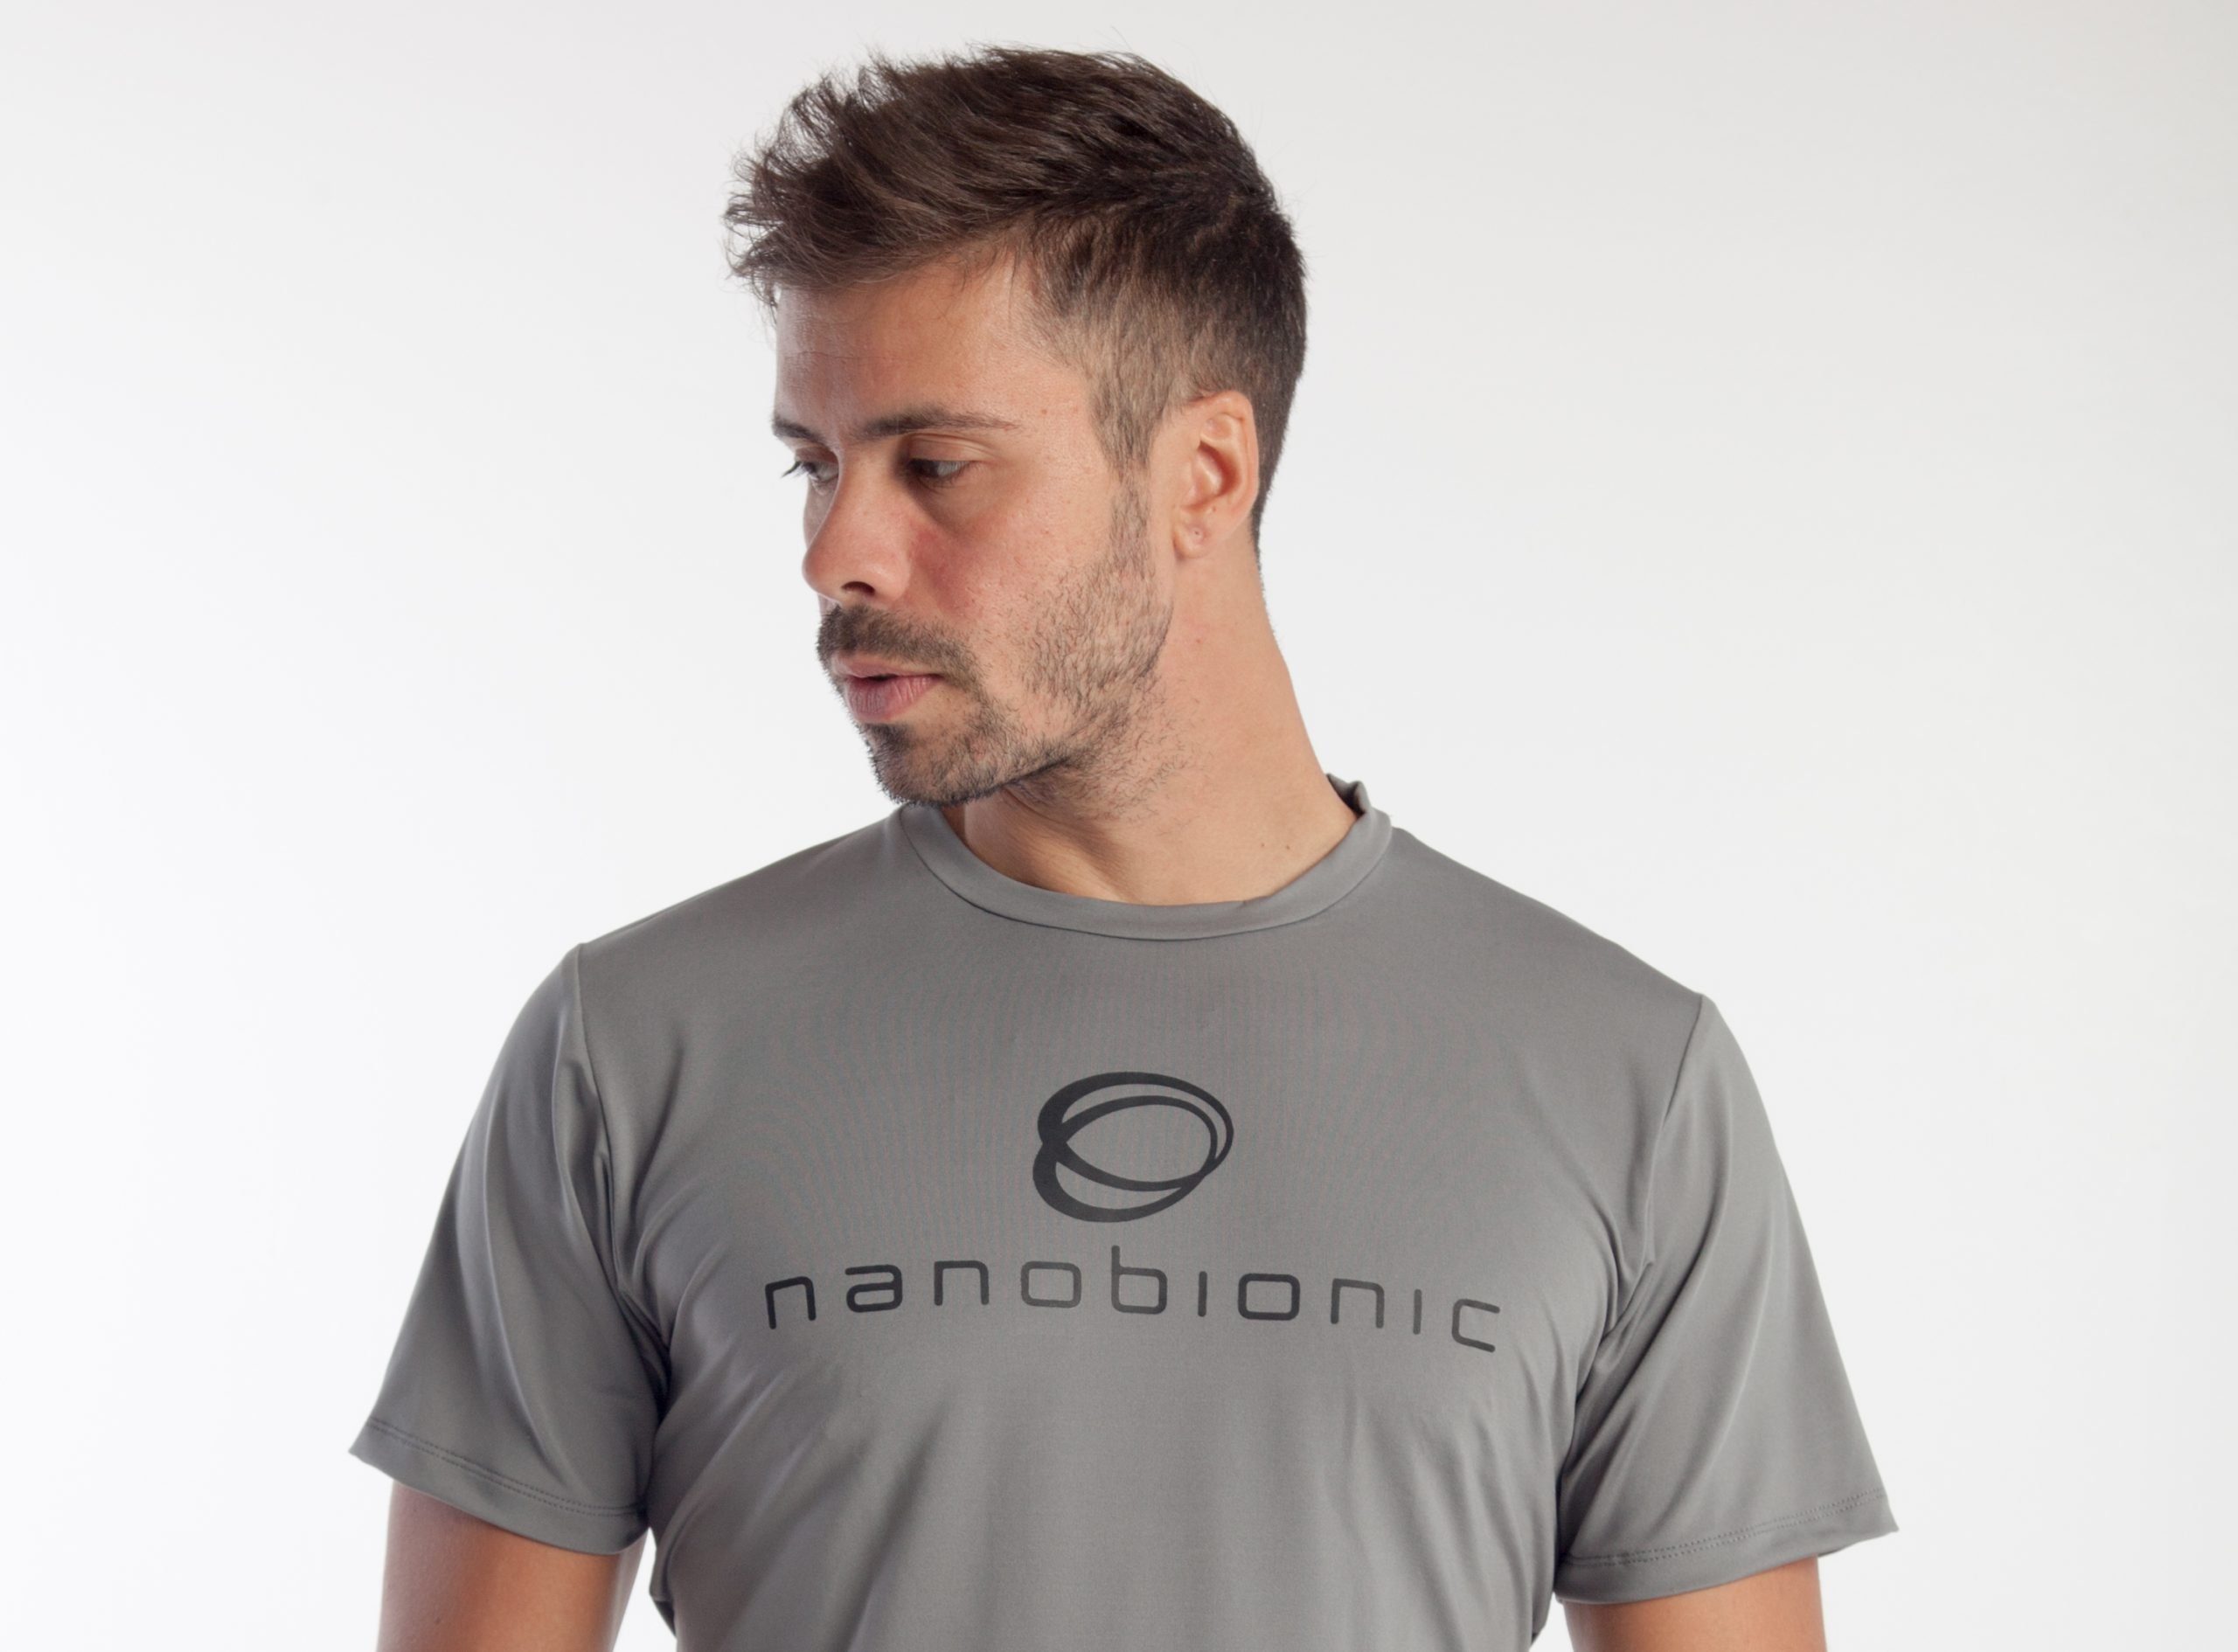 und Award) Funktionsshirt NANOBIONIC® eine I-Tech www.nanobionic.de Nanobionic® (grau/schwarz) (Innovative endlose - Iconic NASA exklusive Energiequelle!!, nahezu NANOBIONIC® NANOBIONIC®-Technologie, T-shirt